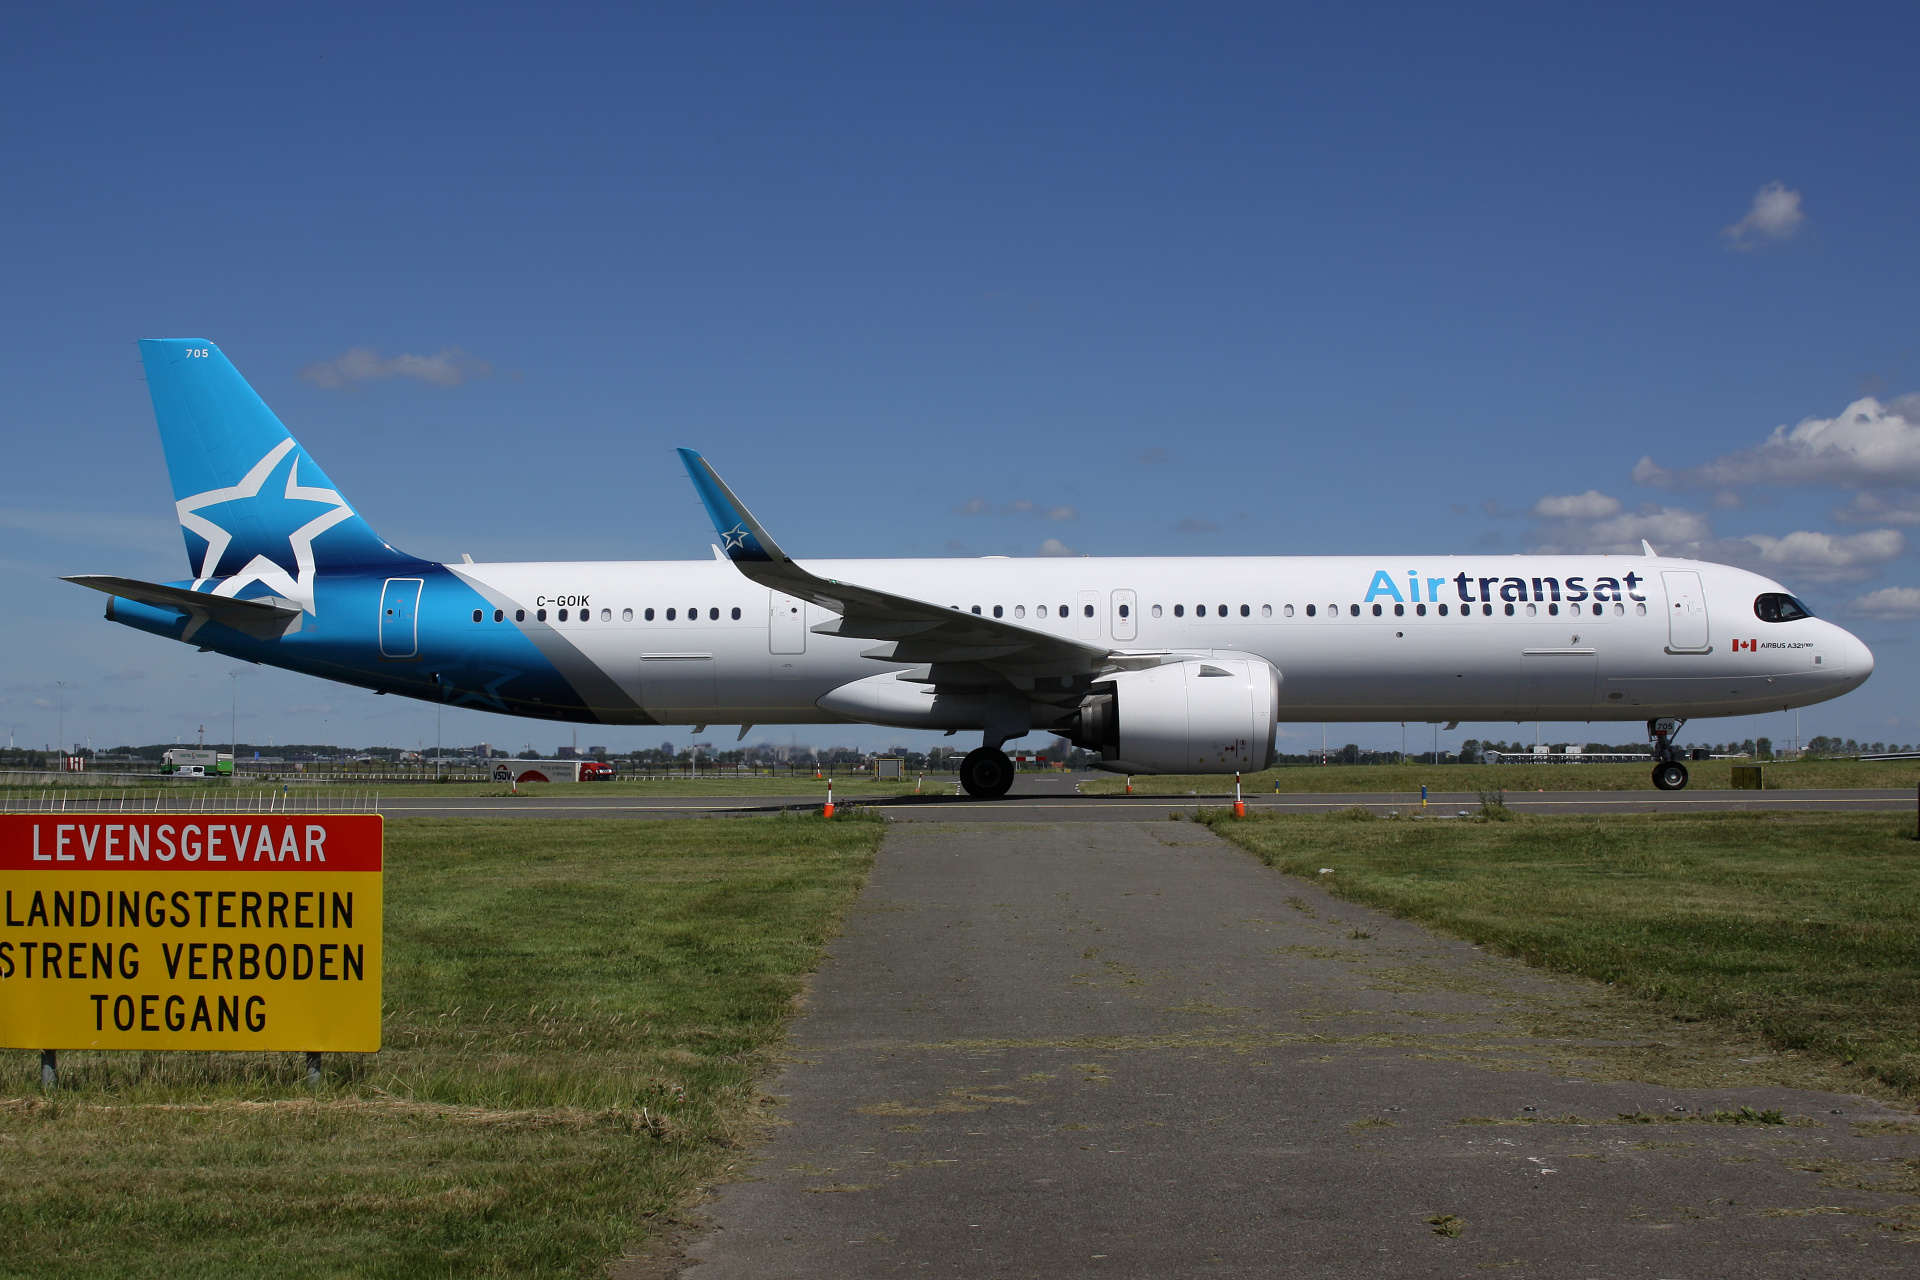 C-GOIK, Air Transat (Aircraft » Schiphol Spotting » Airbus A321neo)